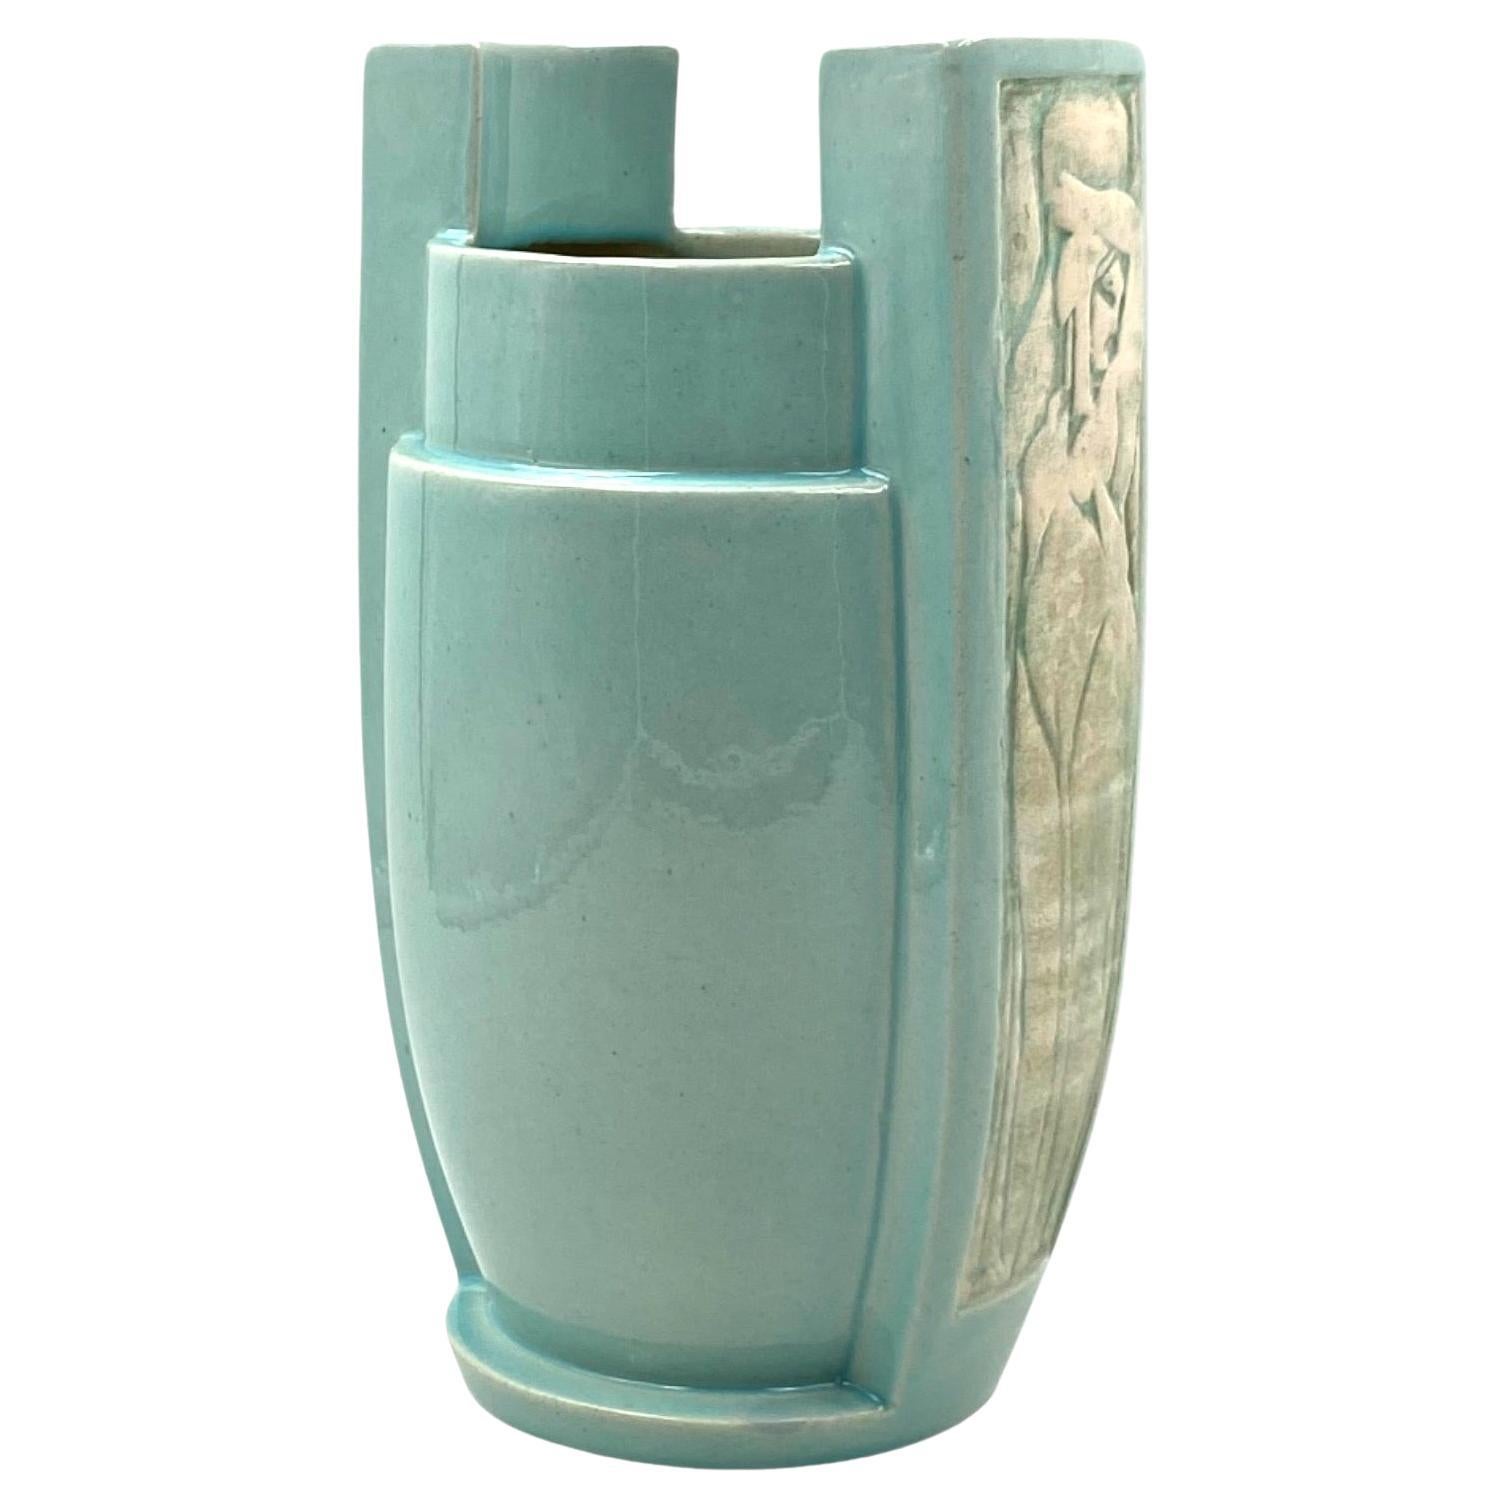 Art Deco azure ceramic Vase, France 1940s